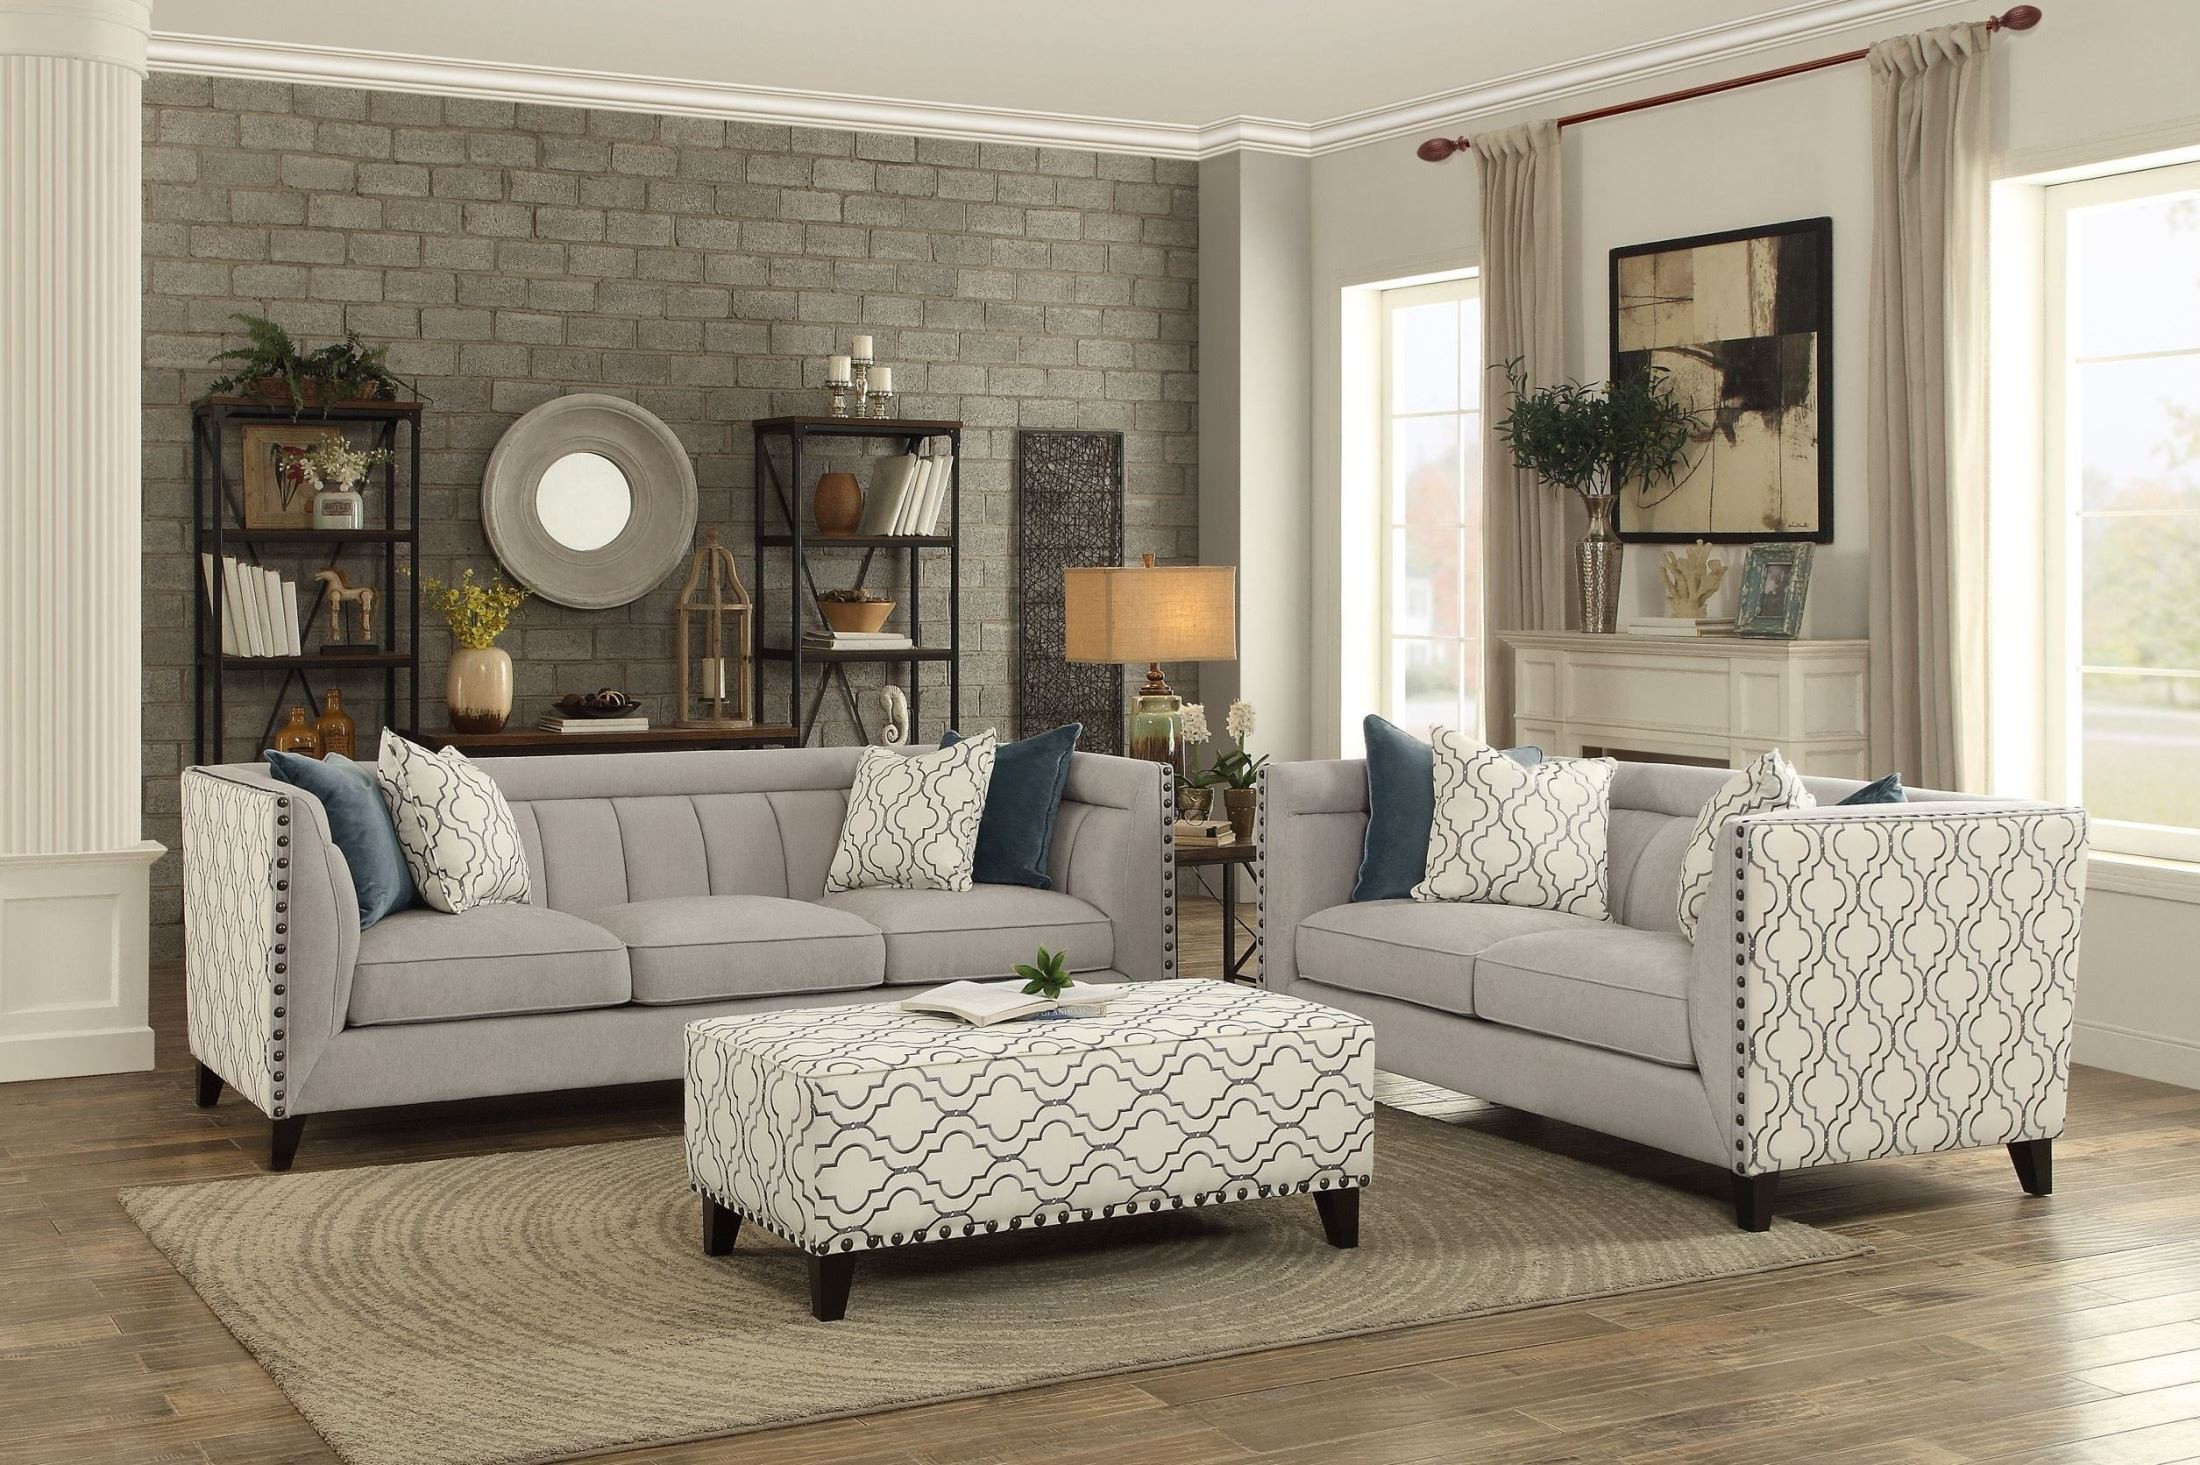 Light Grey Couch Living Room
 Temptation Light Grey Living Room Set from Homelegance